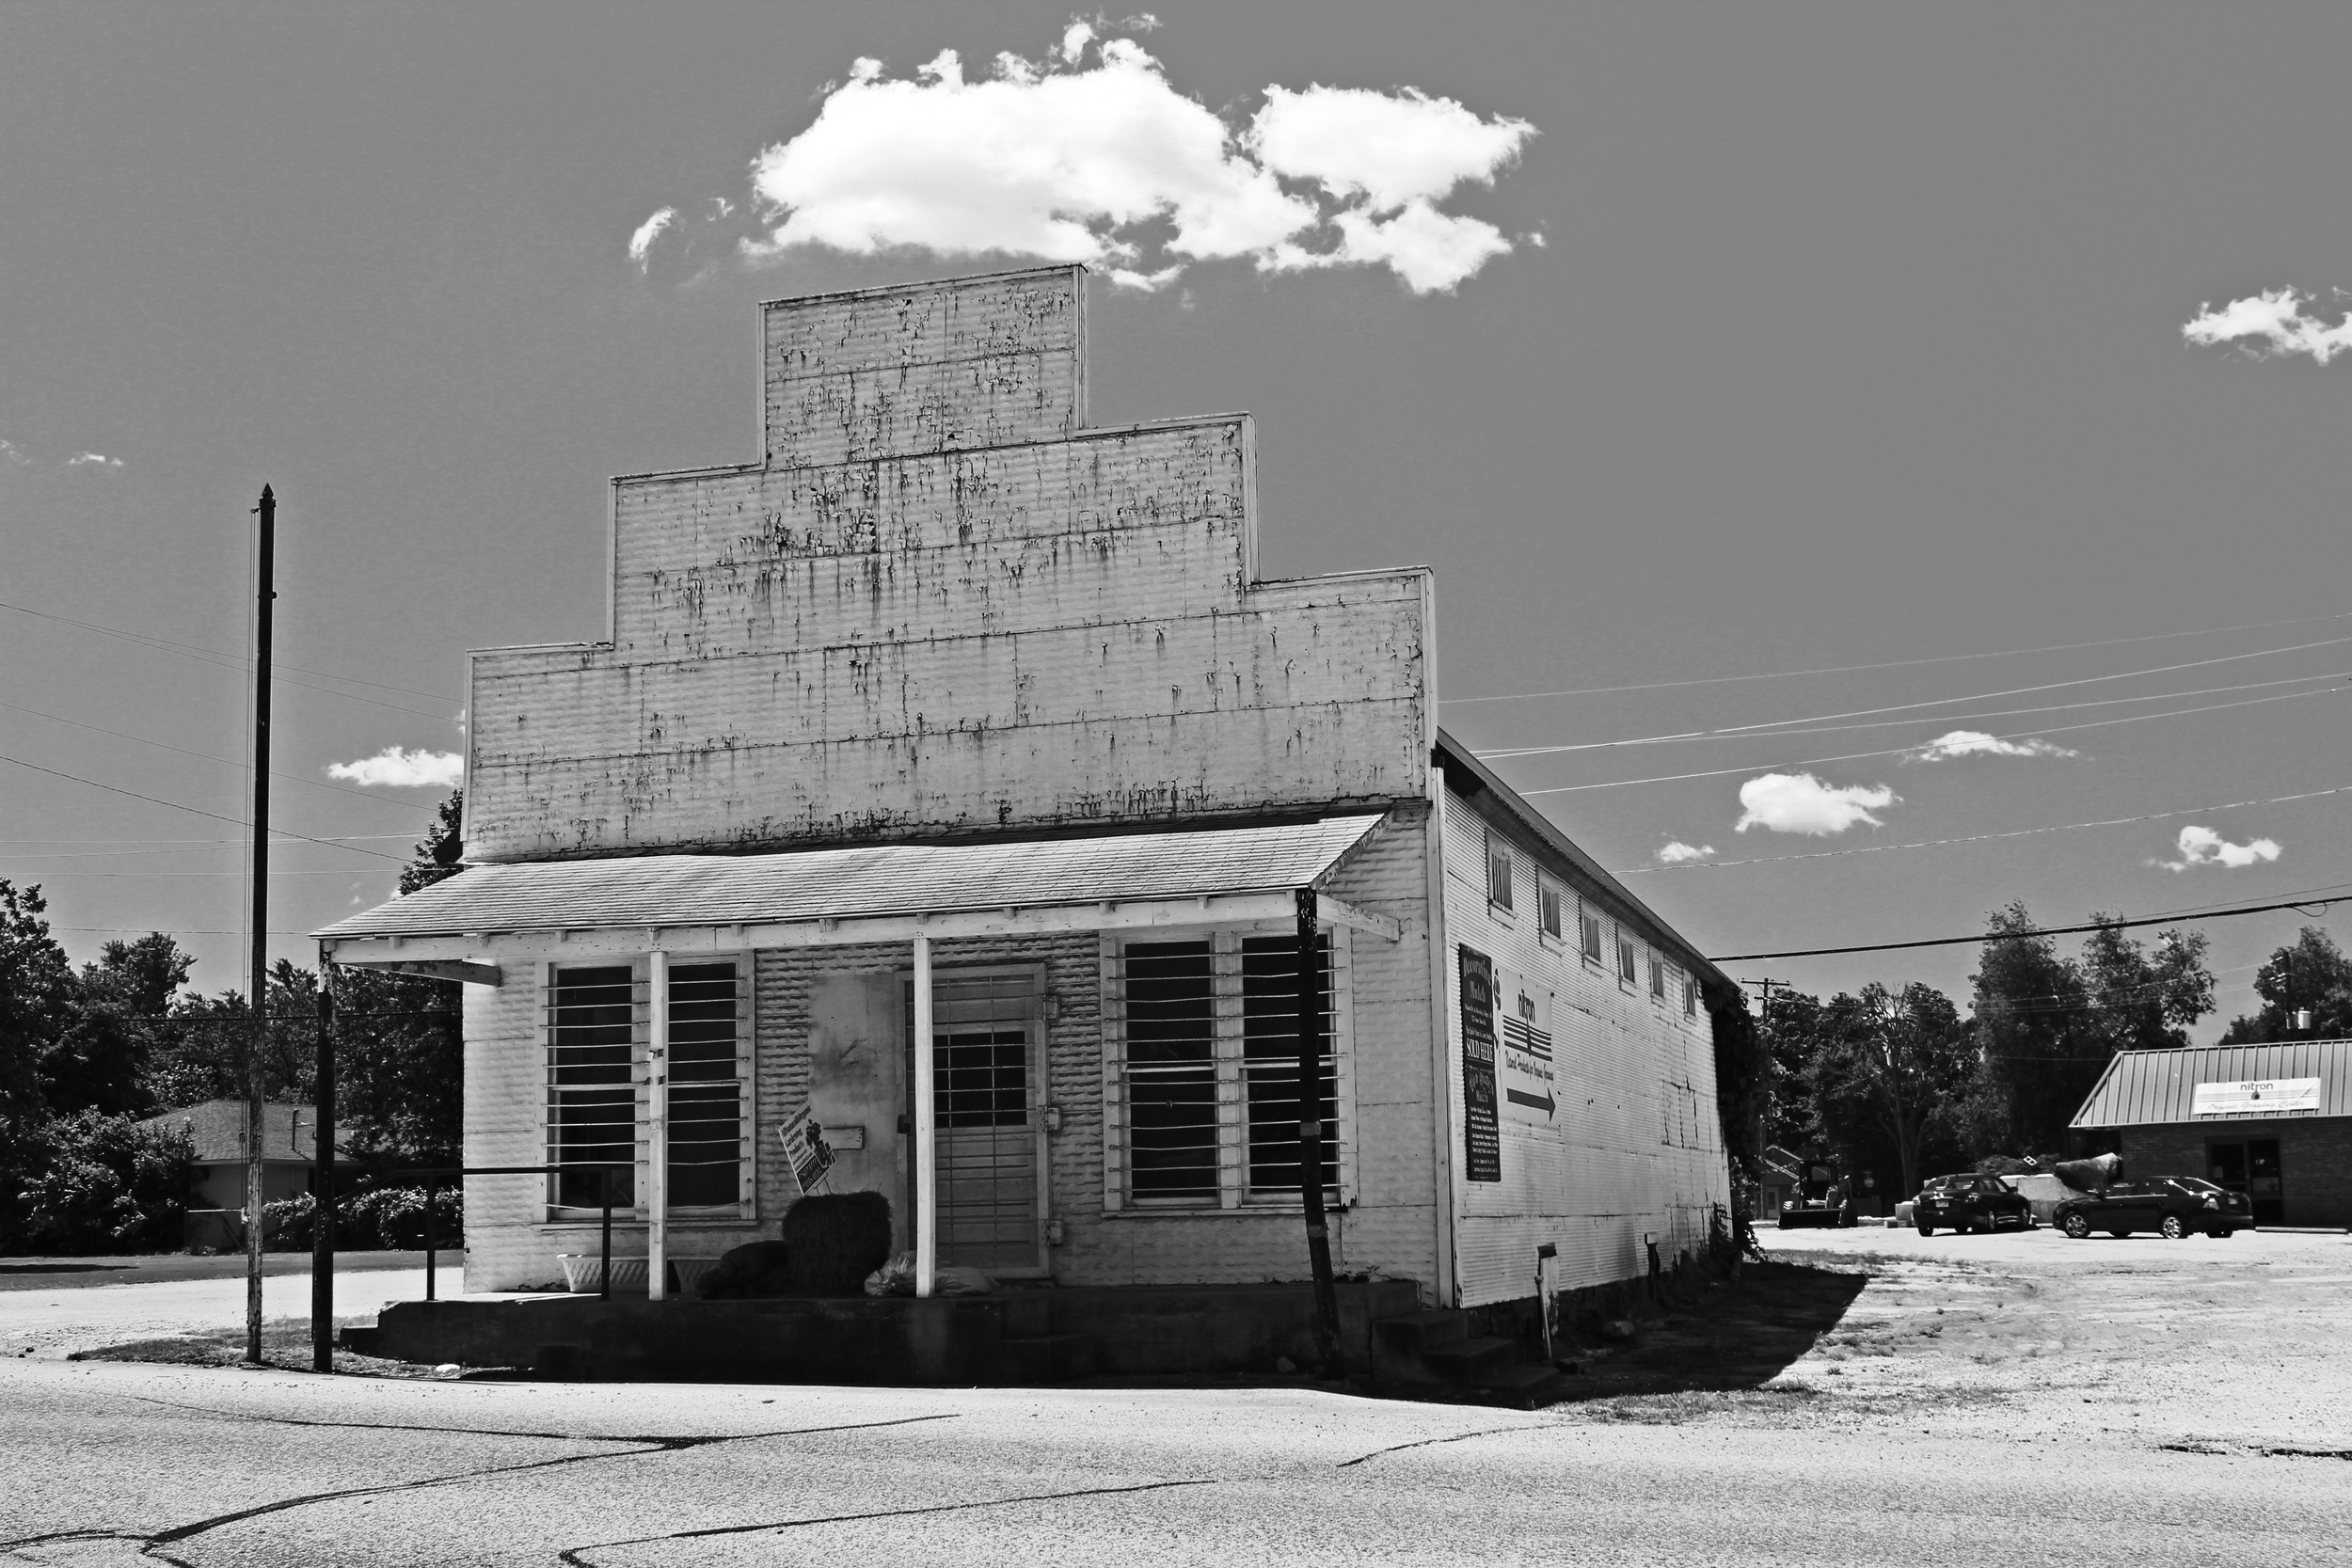    Johnson Switch Building  , 2013. Washington County, AR. B&amp;W HDR digital image. 